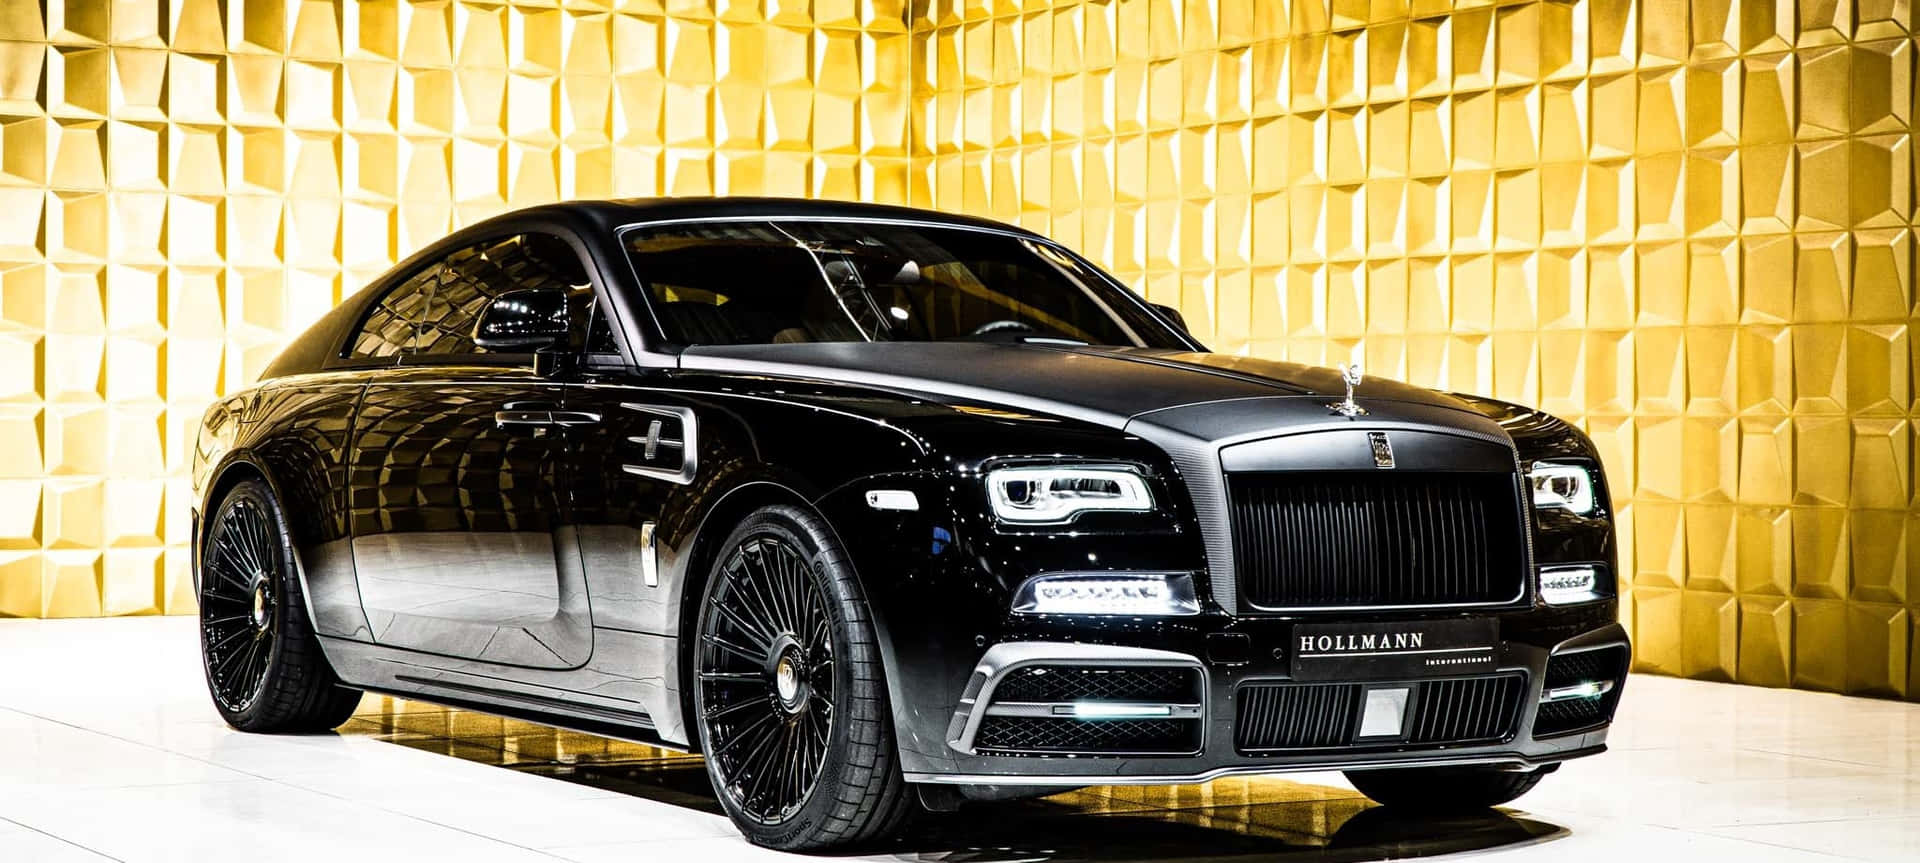 An Exquisite Display Of Luxury - Rolls Royce Wraith Wallpaper